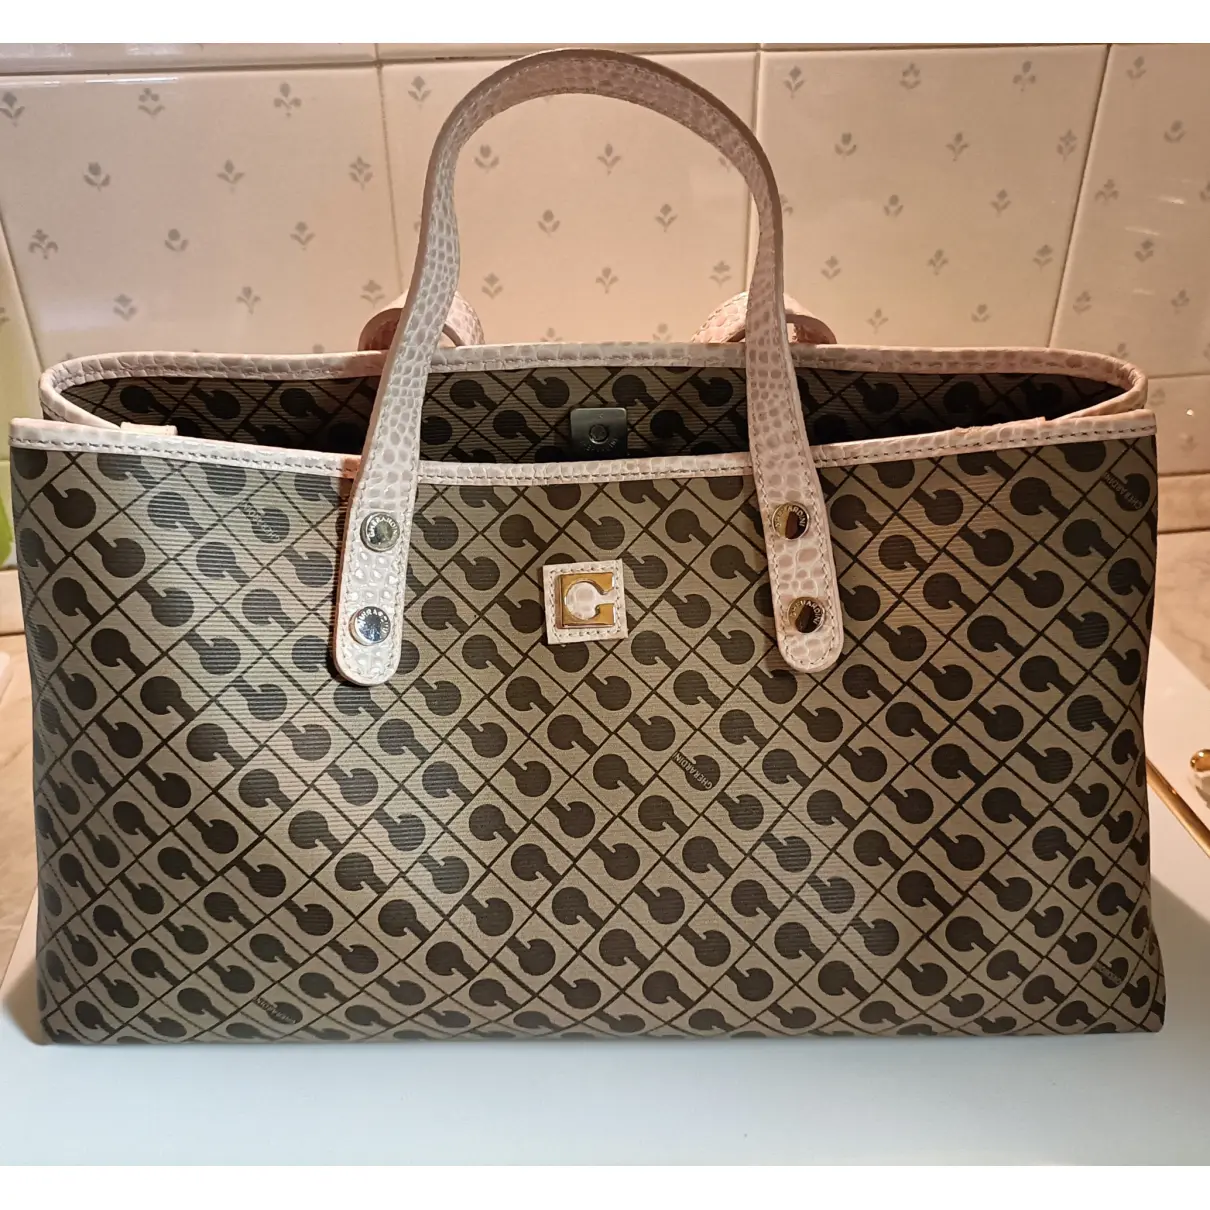 Buy Gherardini Cloth handbag online